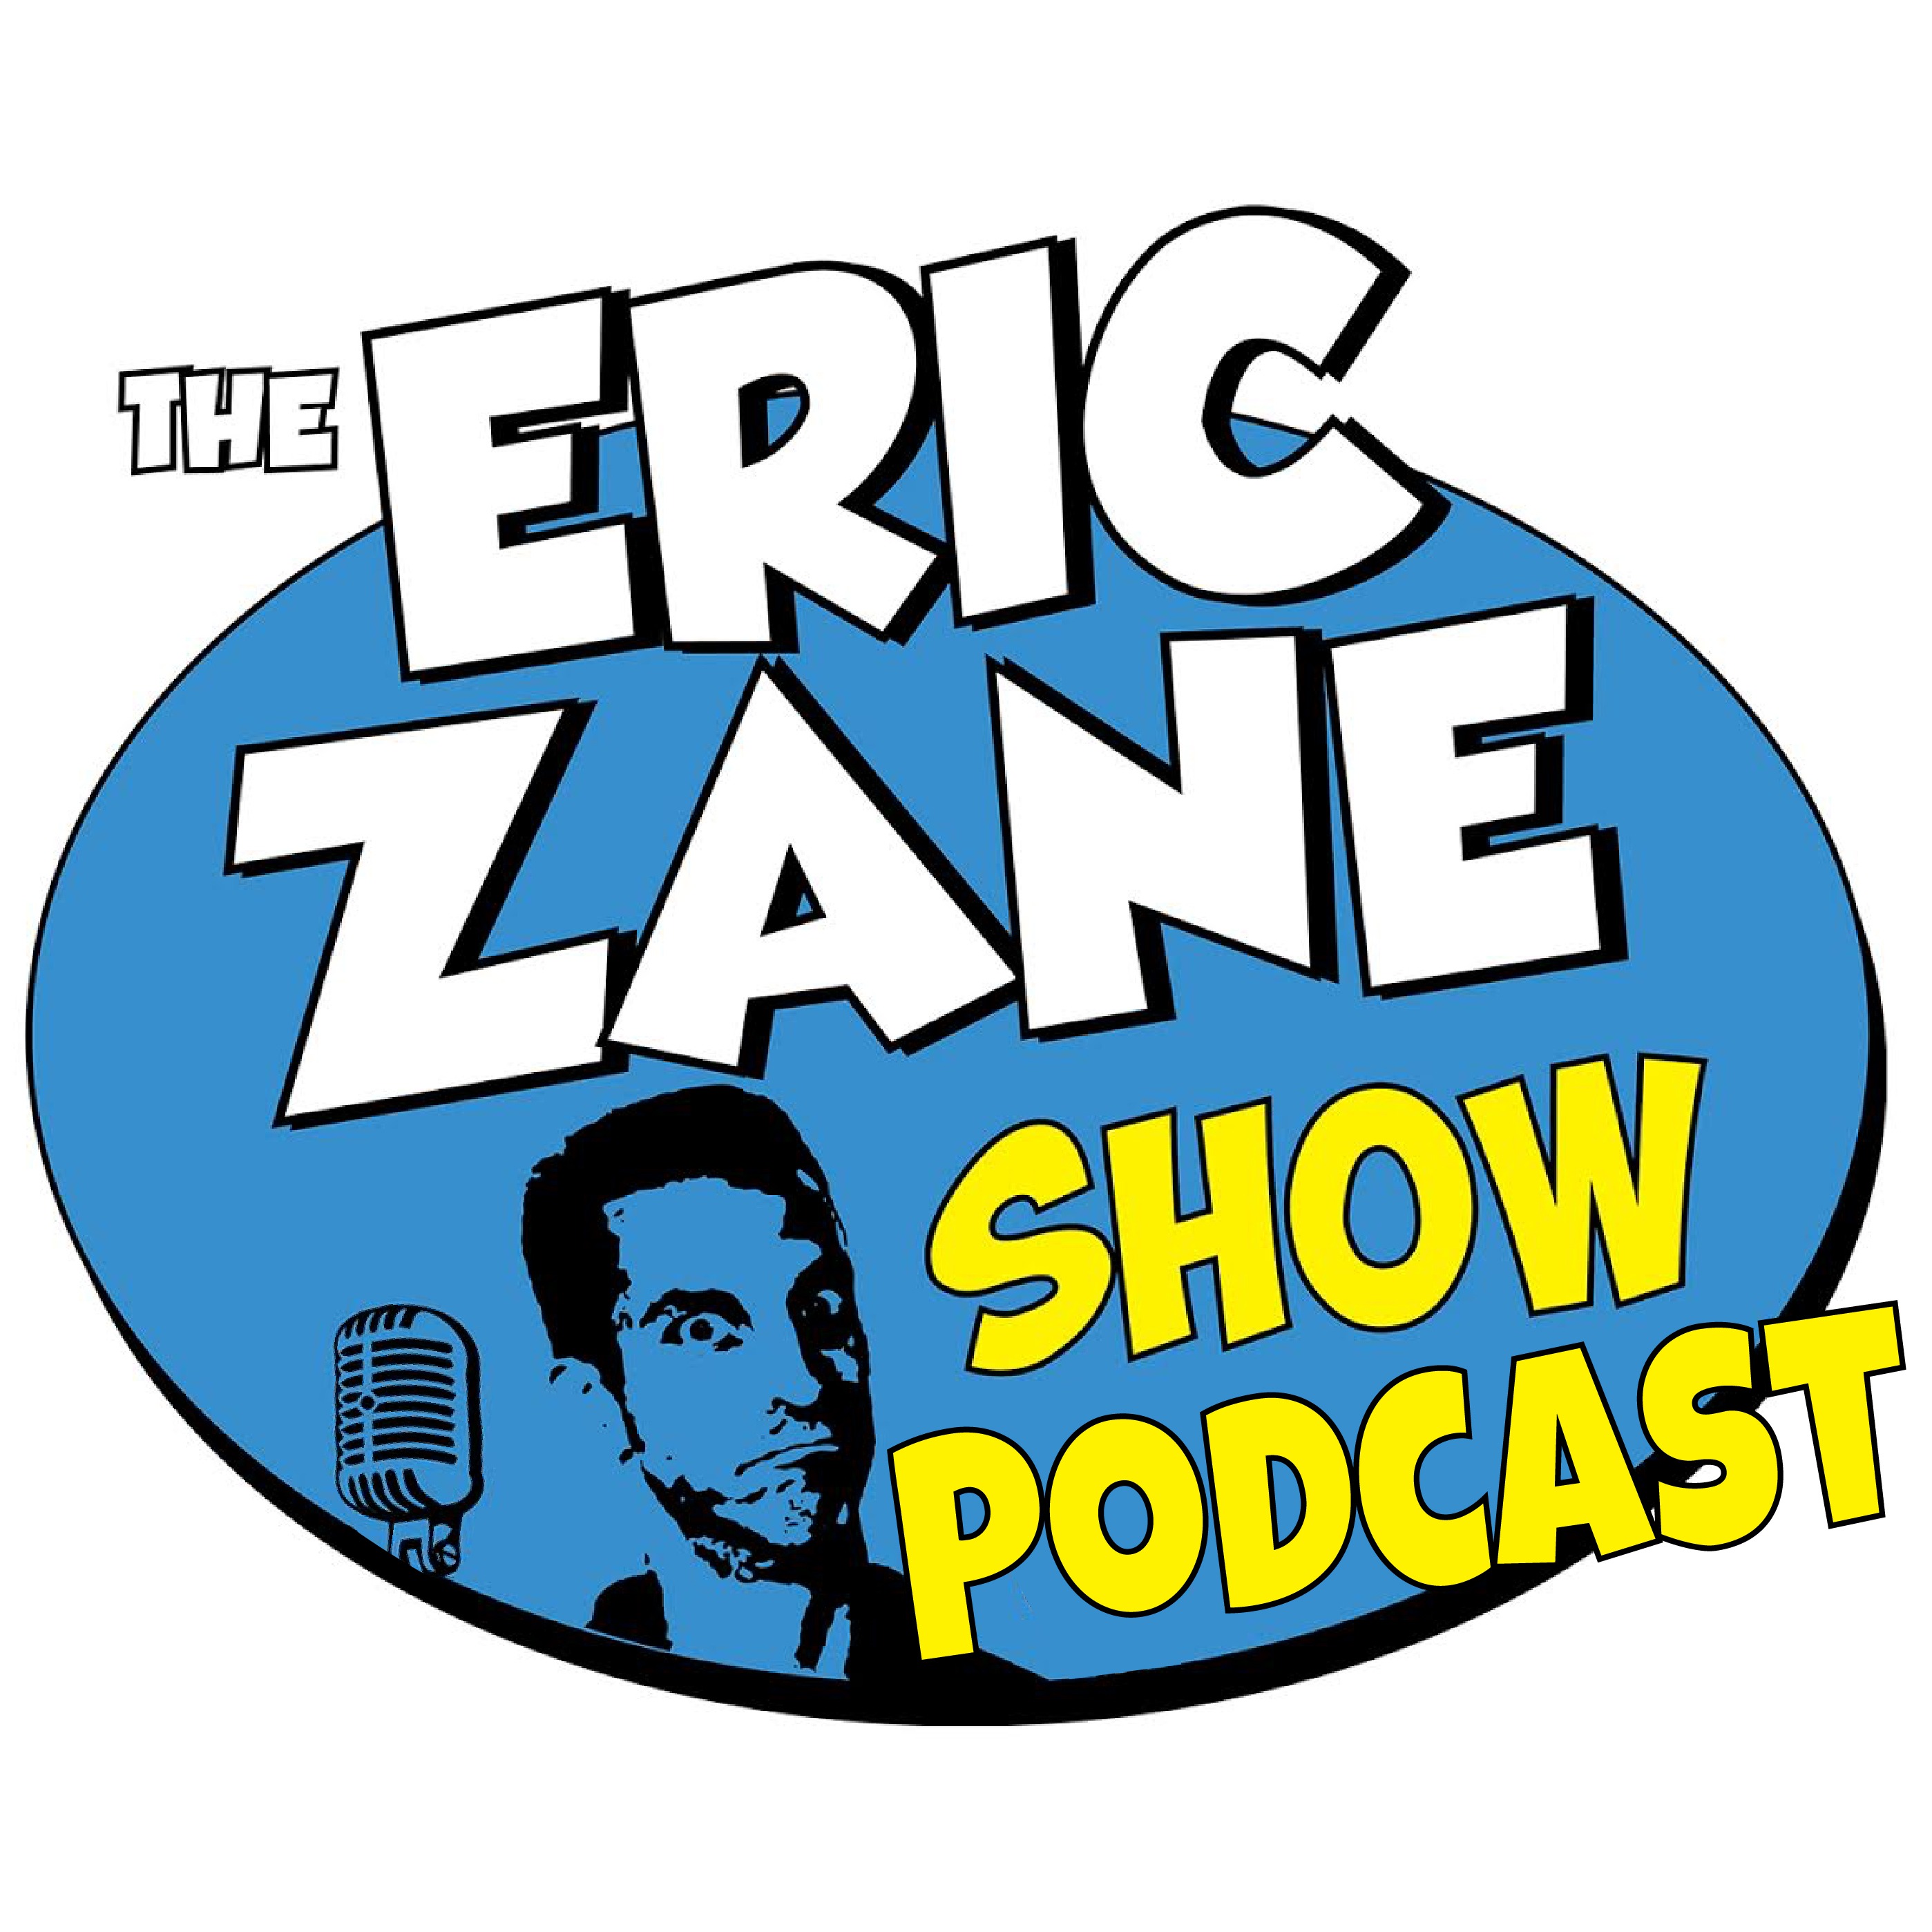 Eric Zane Show Podcast 957 - Diana enraged!